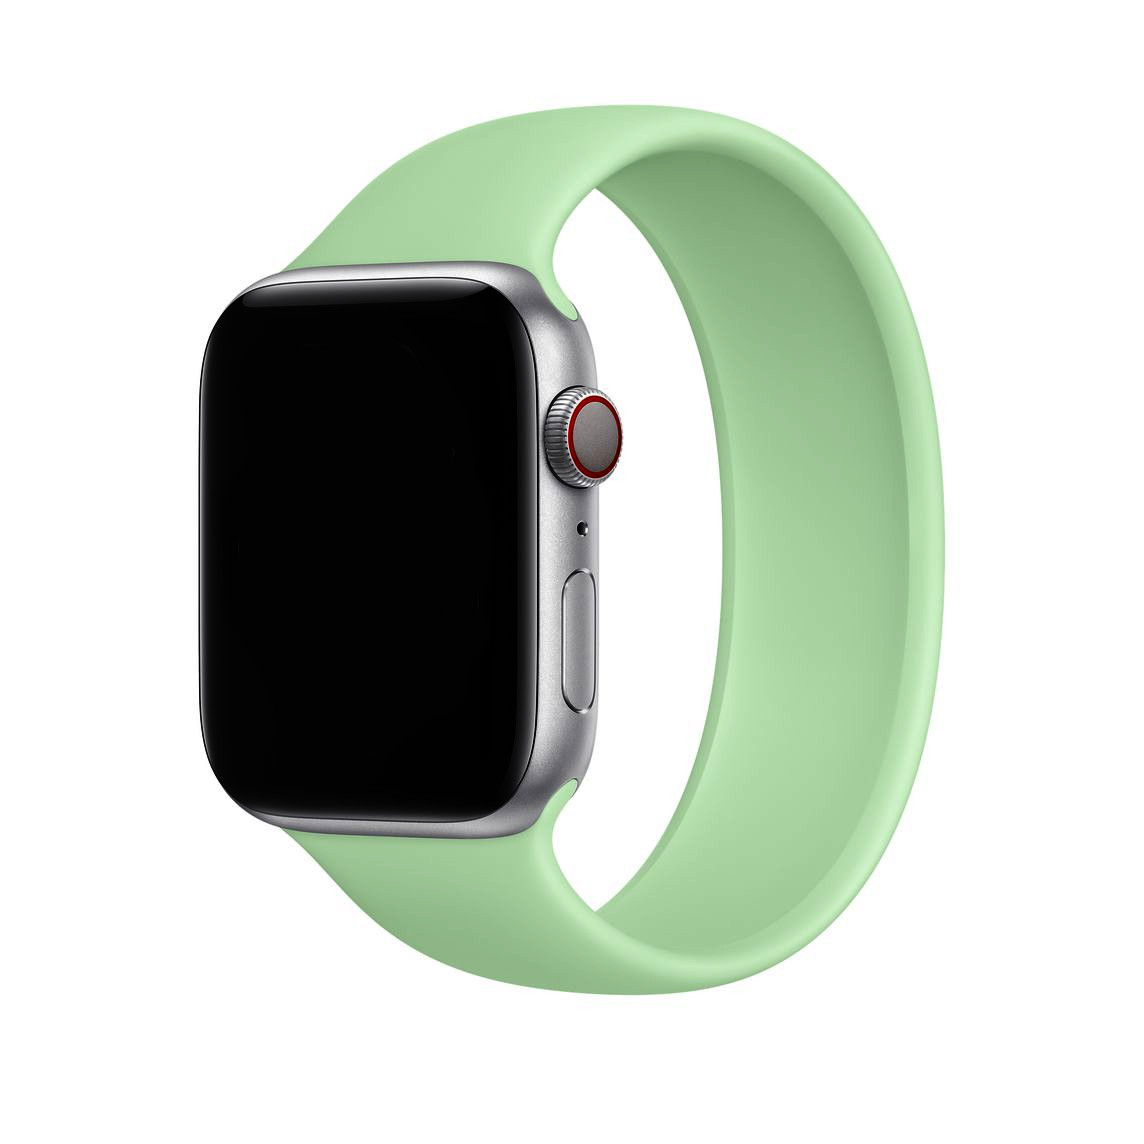 Řemínek iMore Solo Loop Apple Watch Series 1/2/3 42mm - Pistáciová (M)